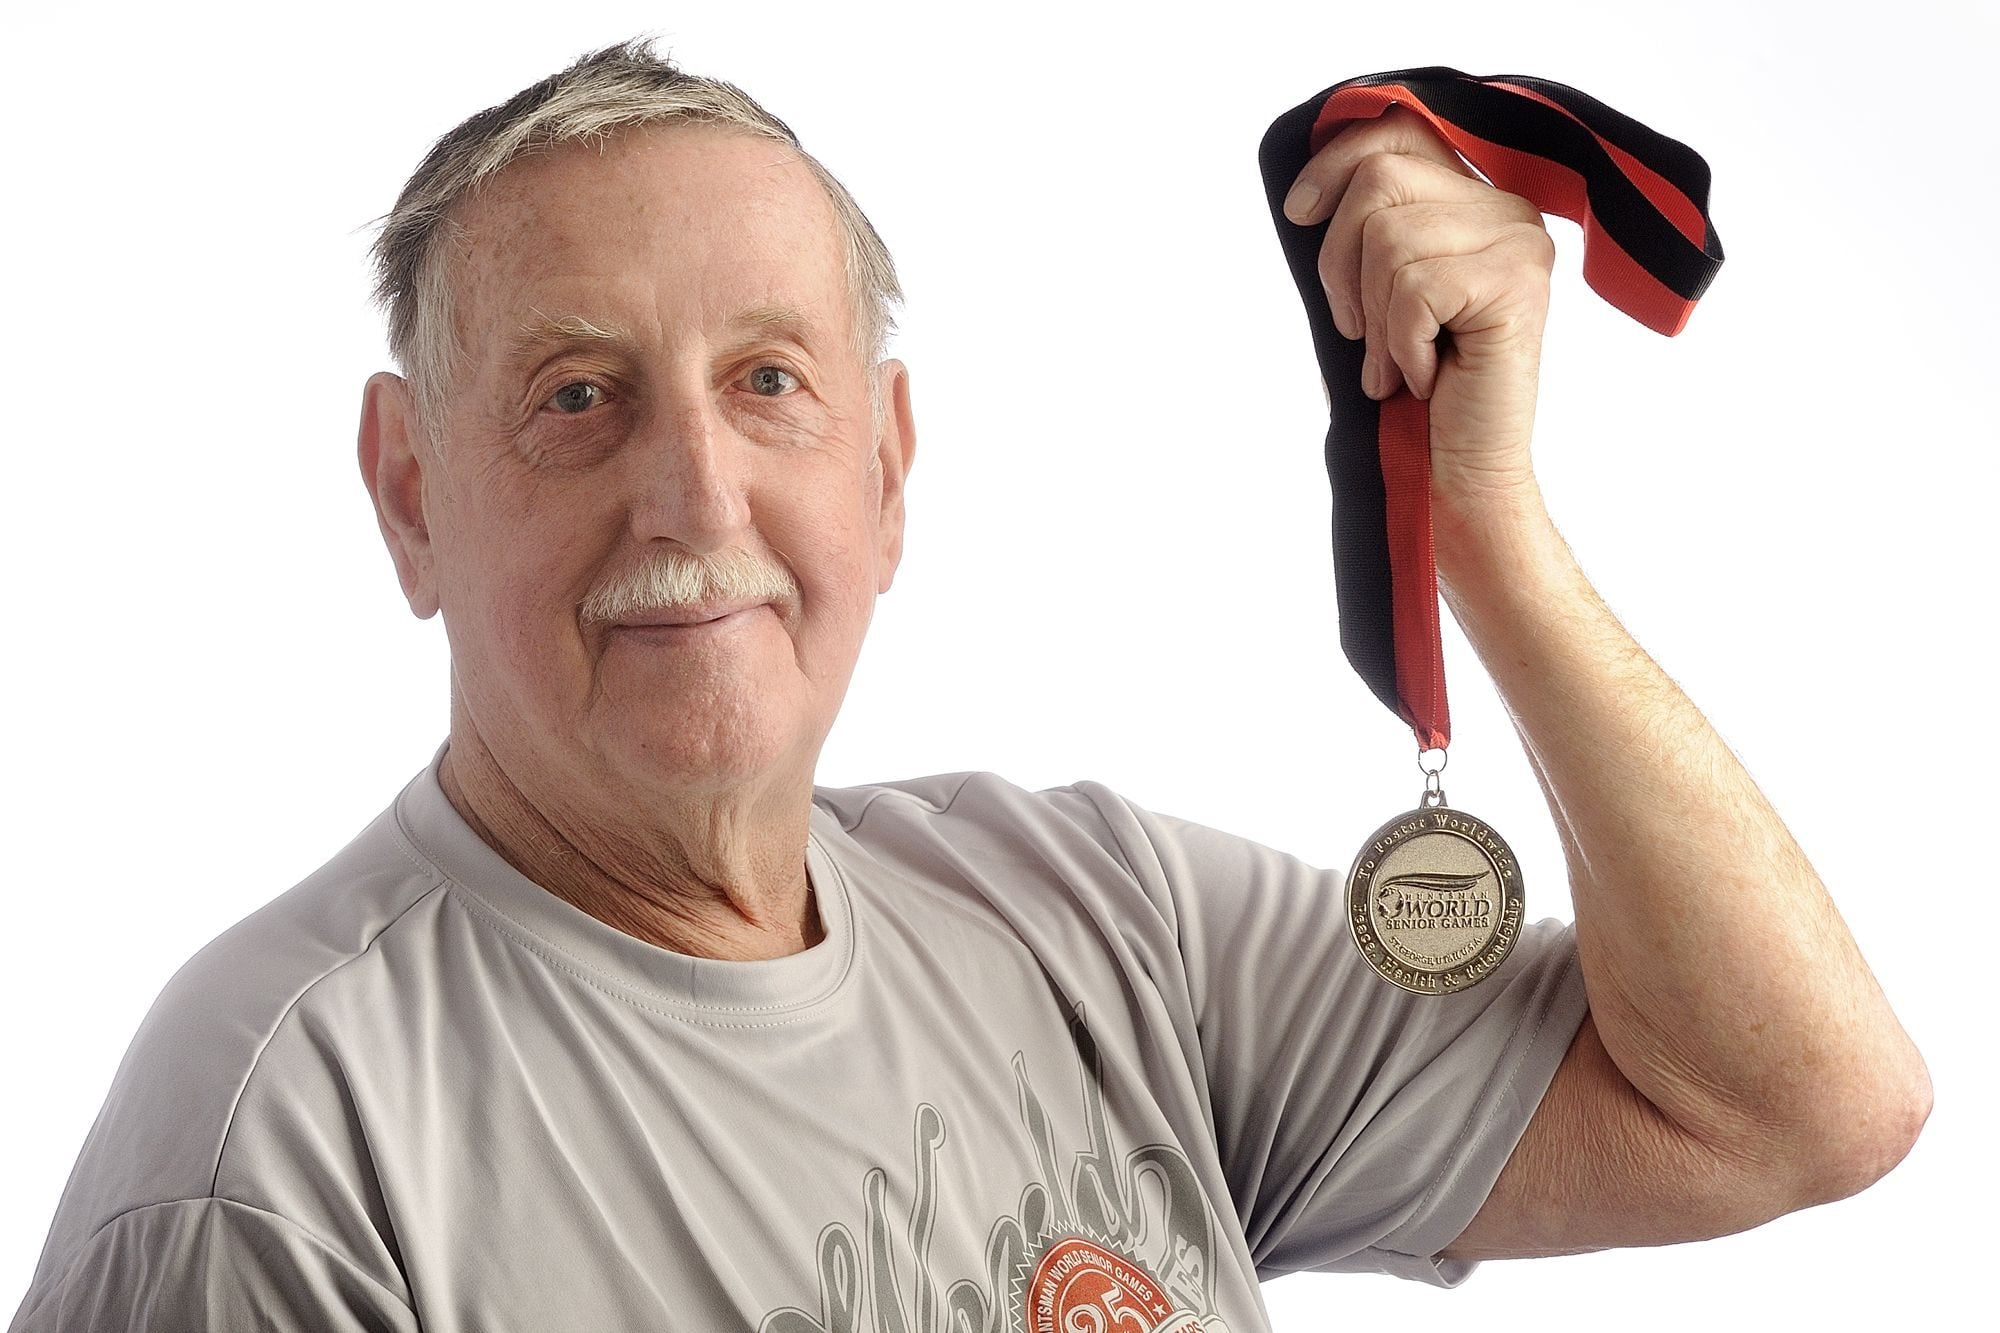 Larry Flindt won this silver medal at the Huntsman World Senior Games last month in St. George, Utah.